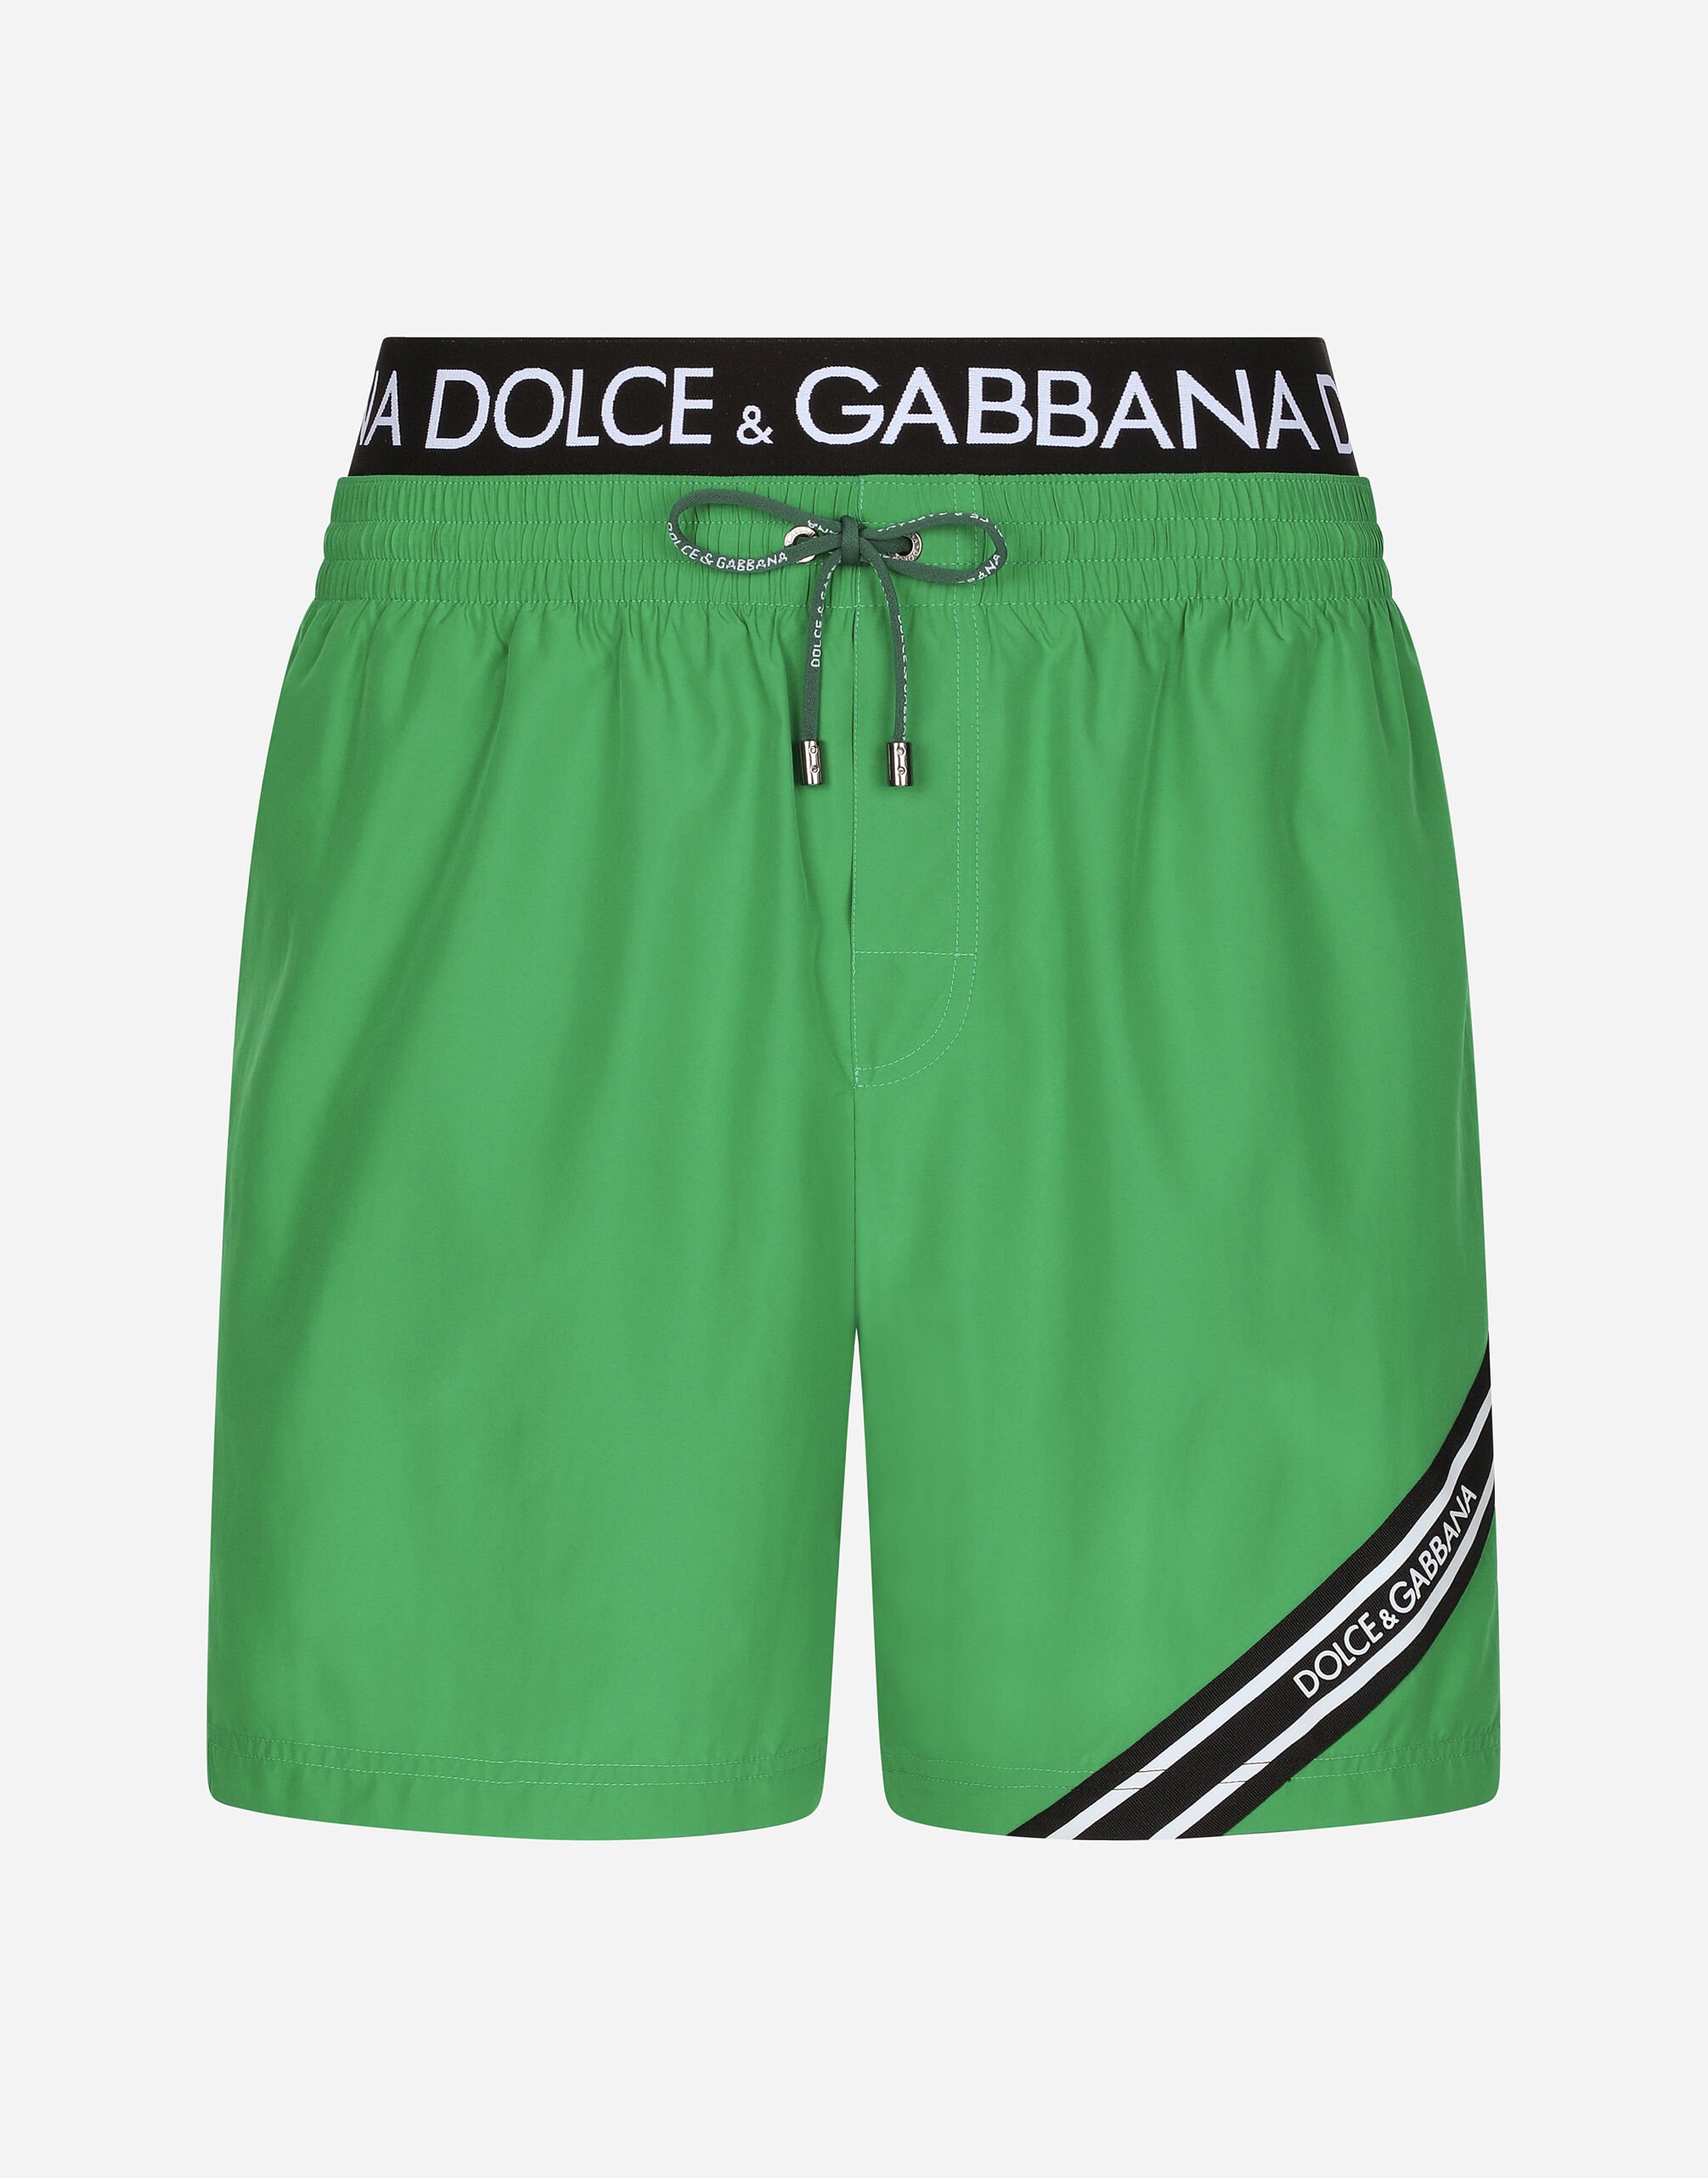 Dolce & Gabbana Mid-length swim trunks with branded band Print M4E68TISMF5